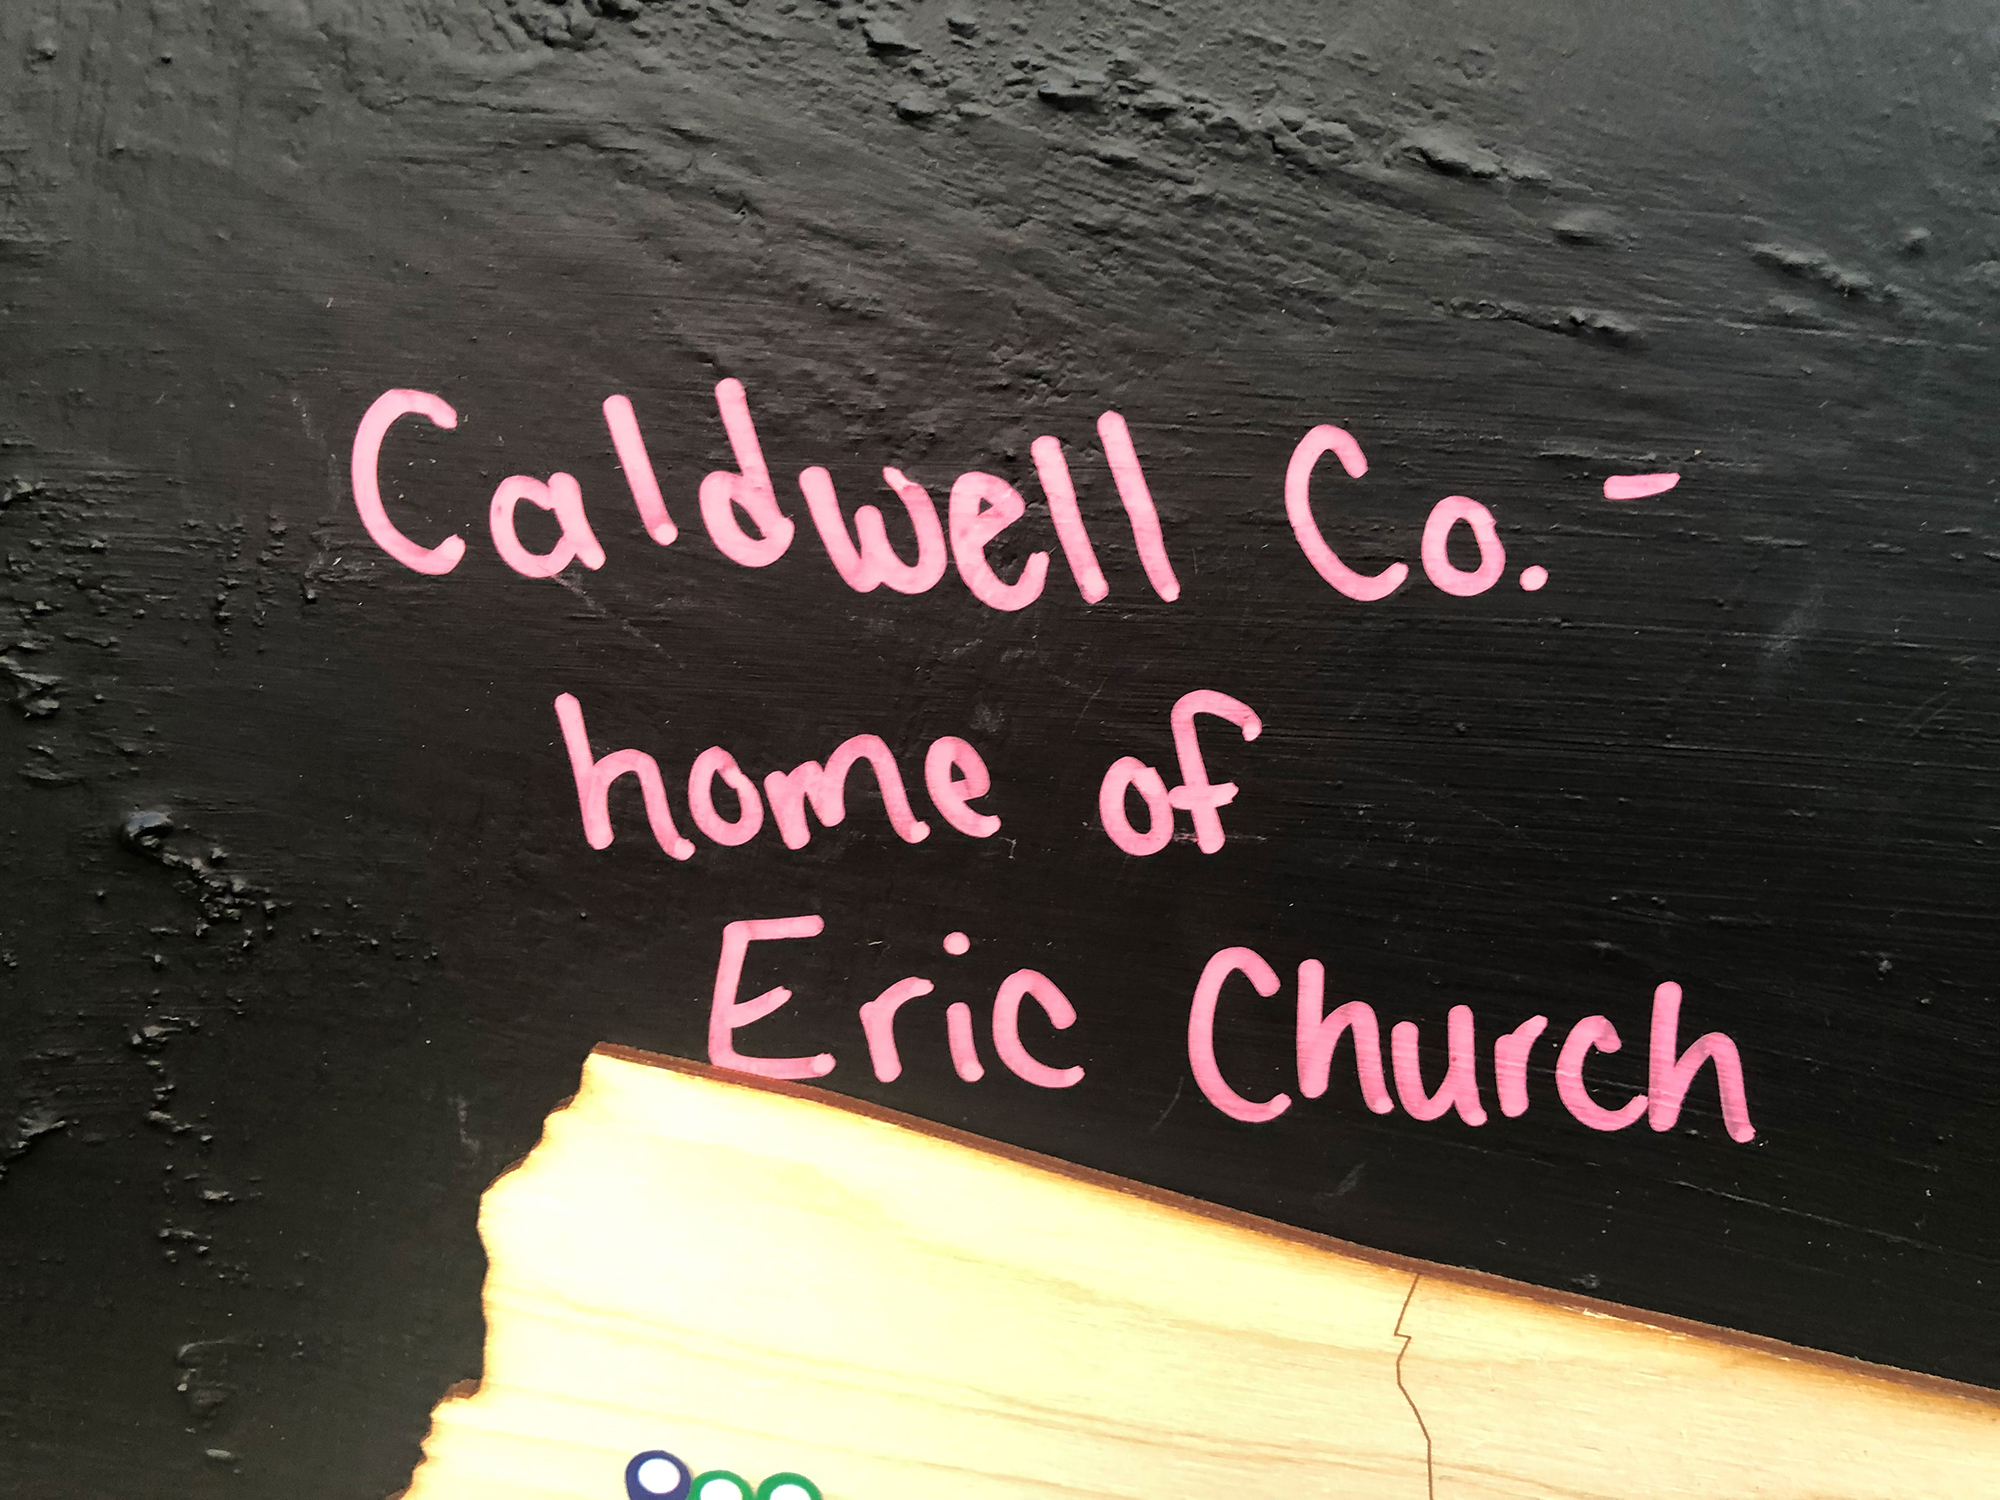 Caldwell County home of Eric Church